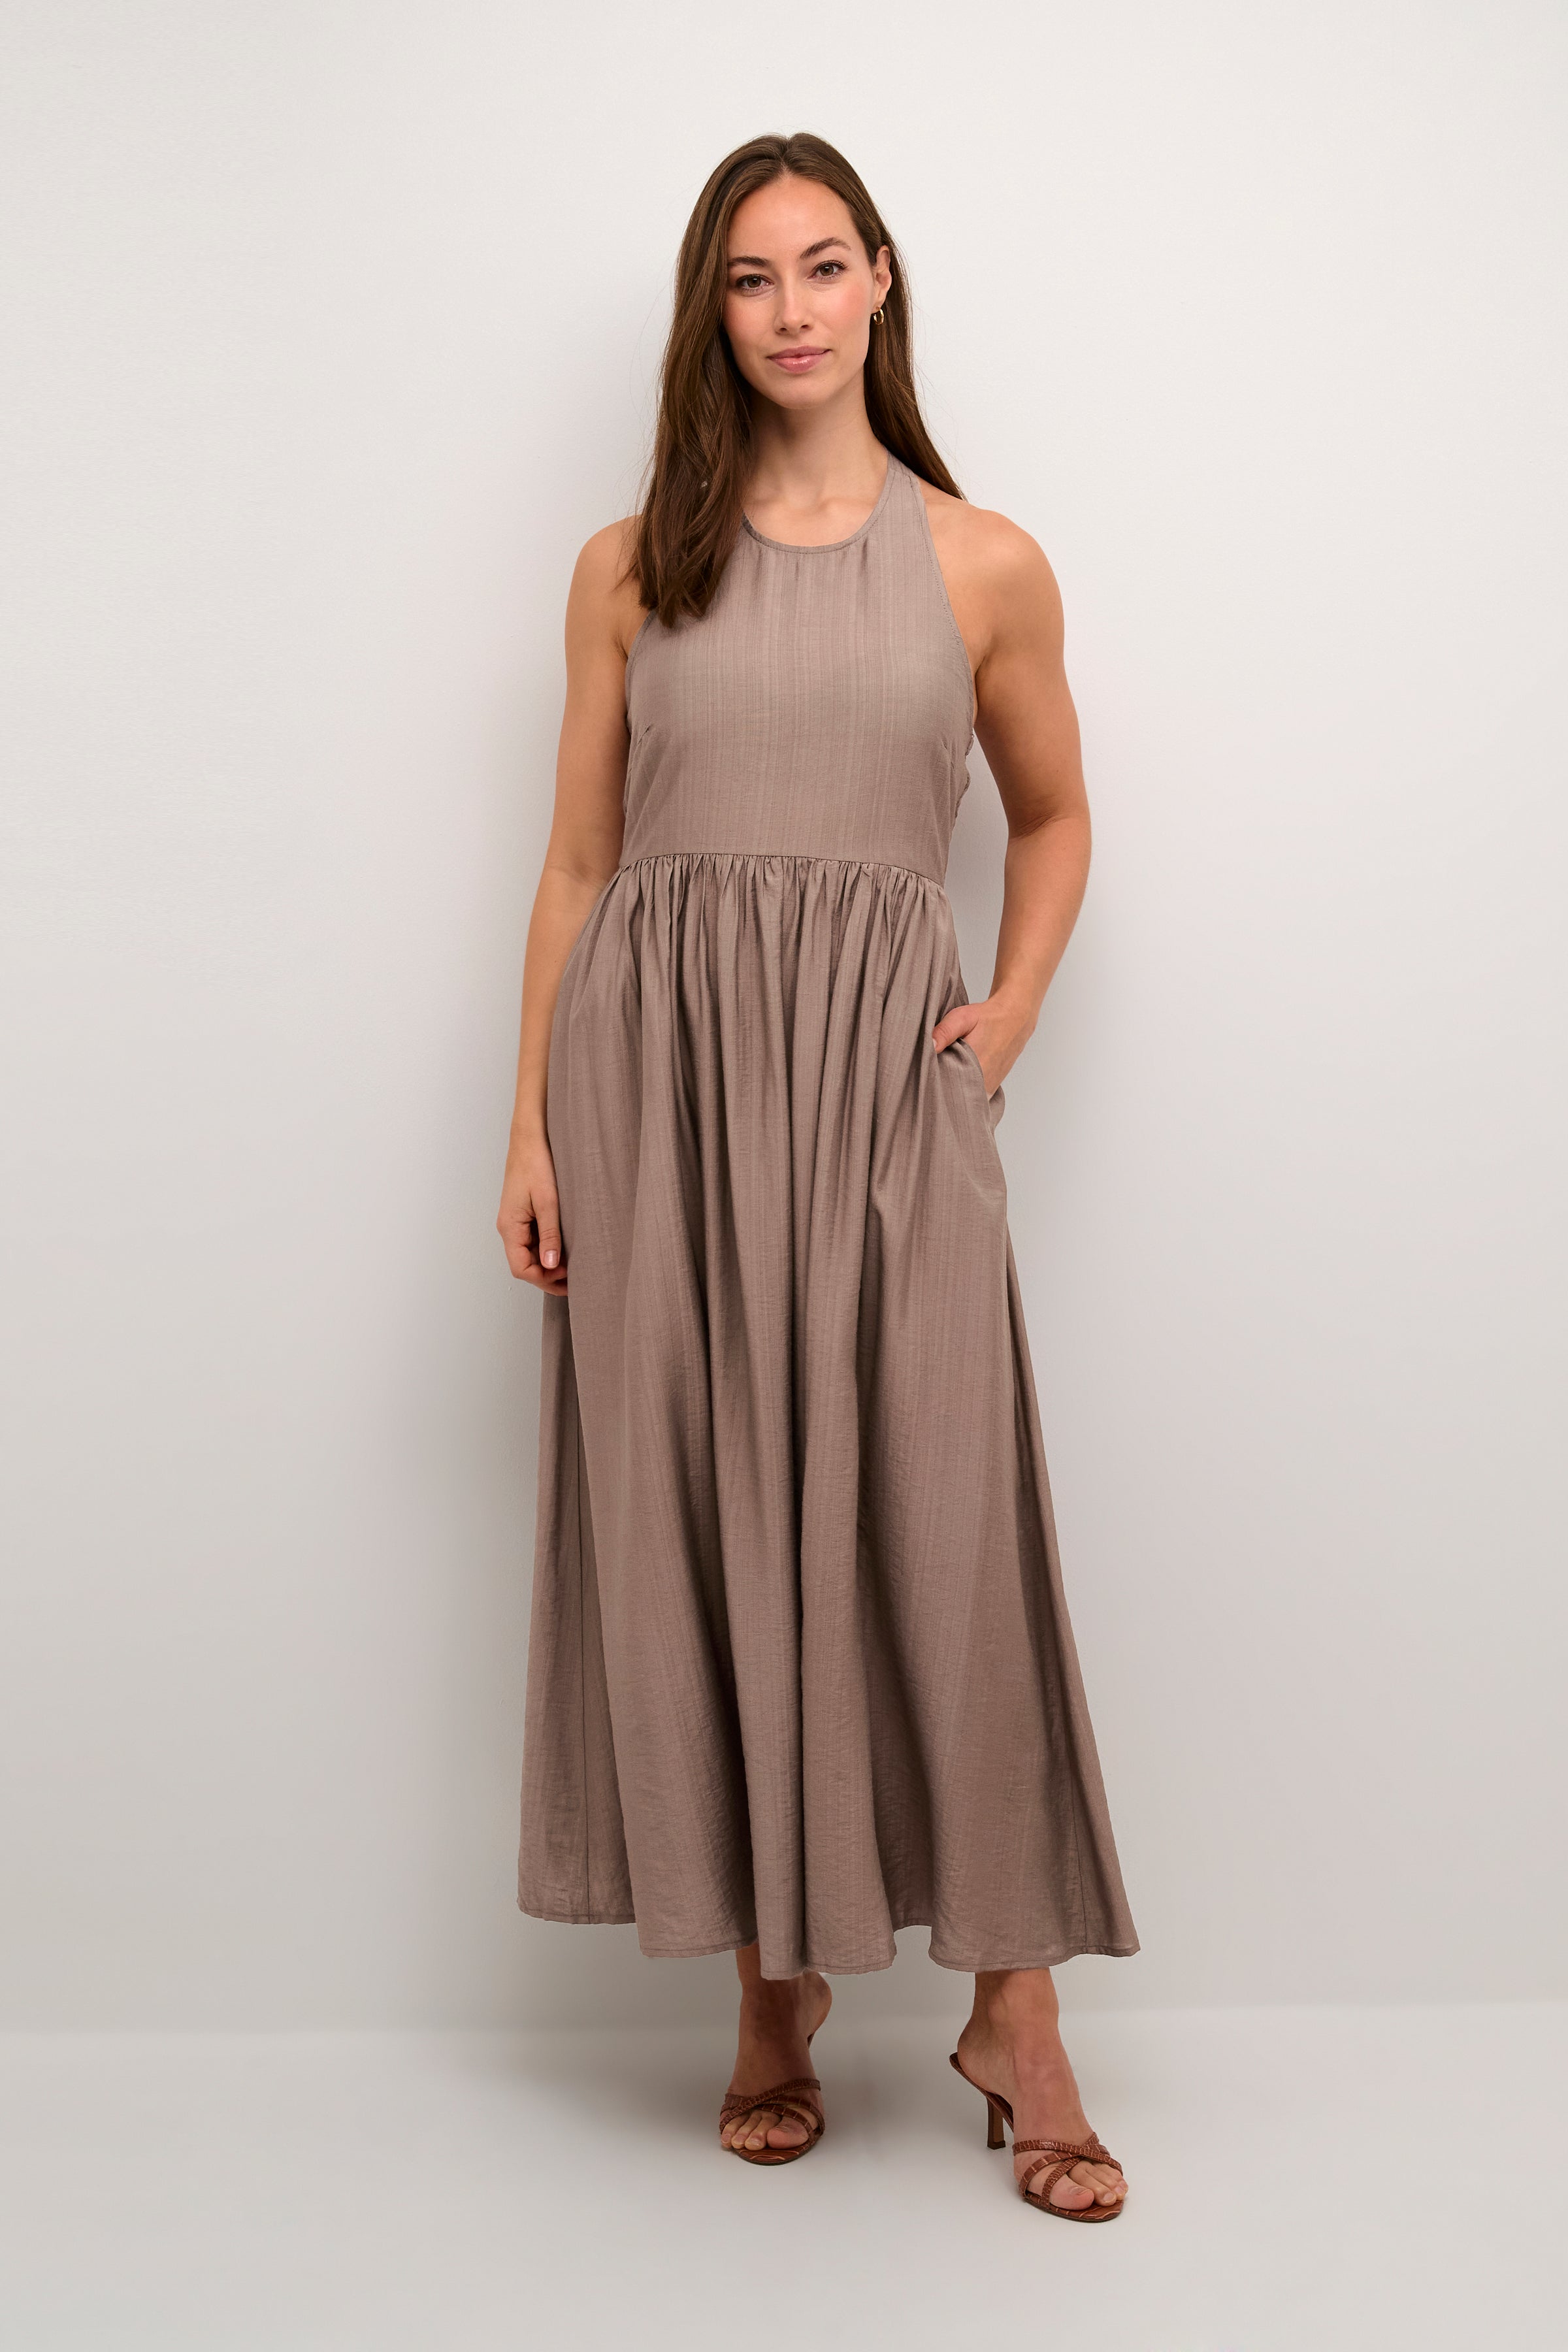 Amino Halterneck Dress in Taupe Grey